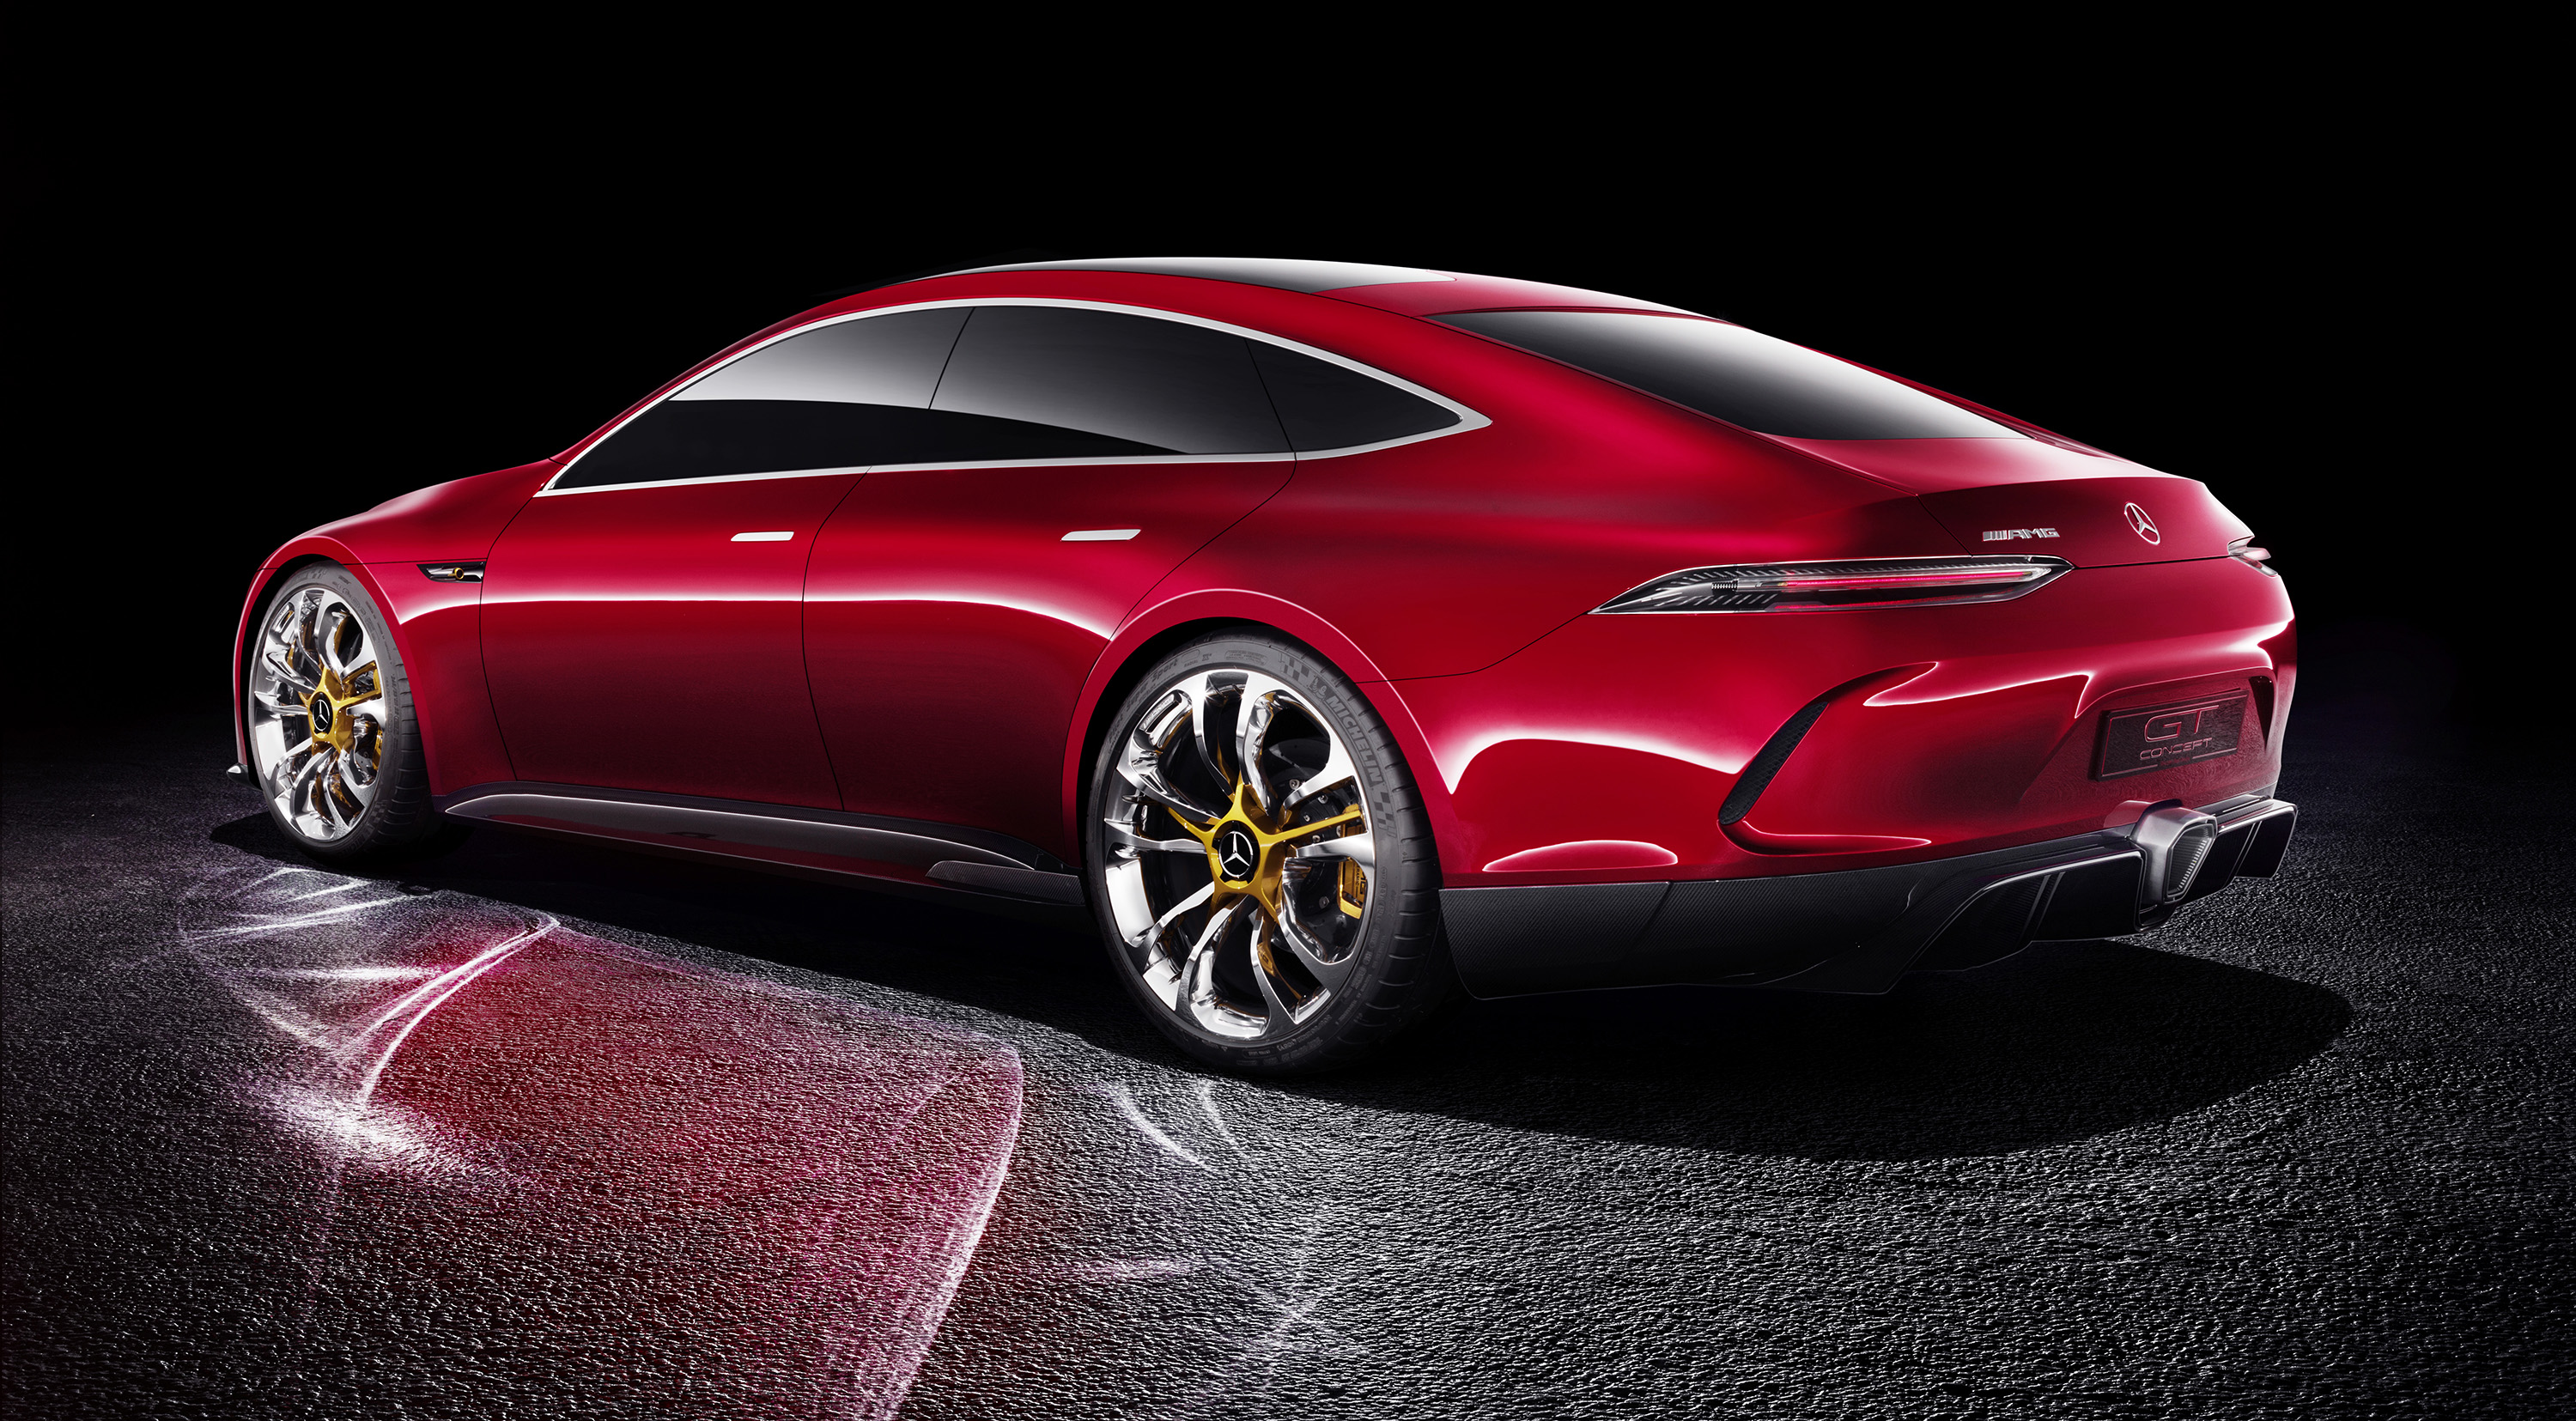 MercedesAMG GT fourdoor concept revealed photos CarAdvice